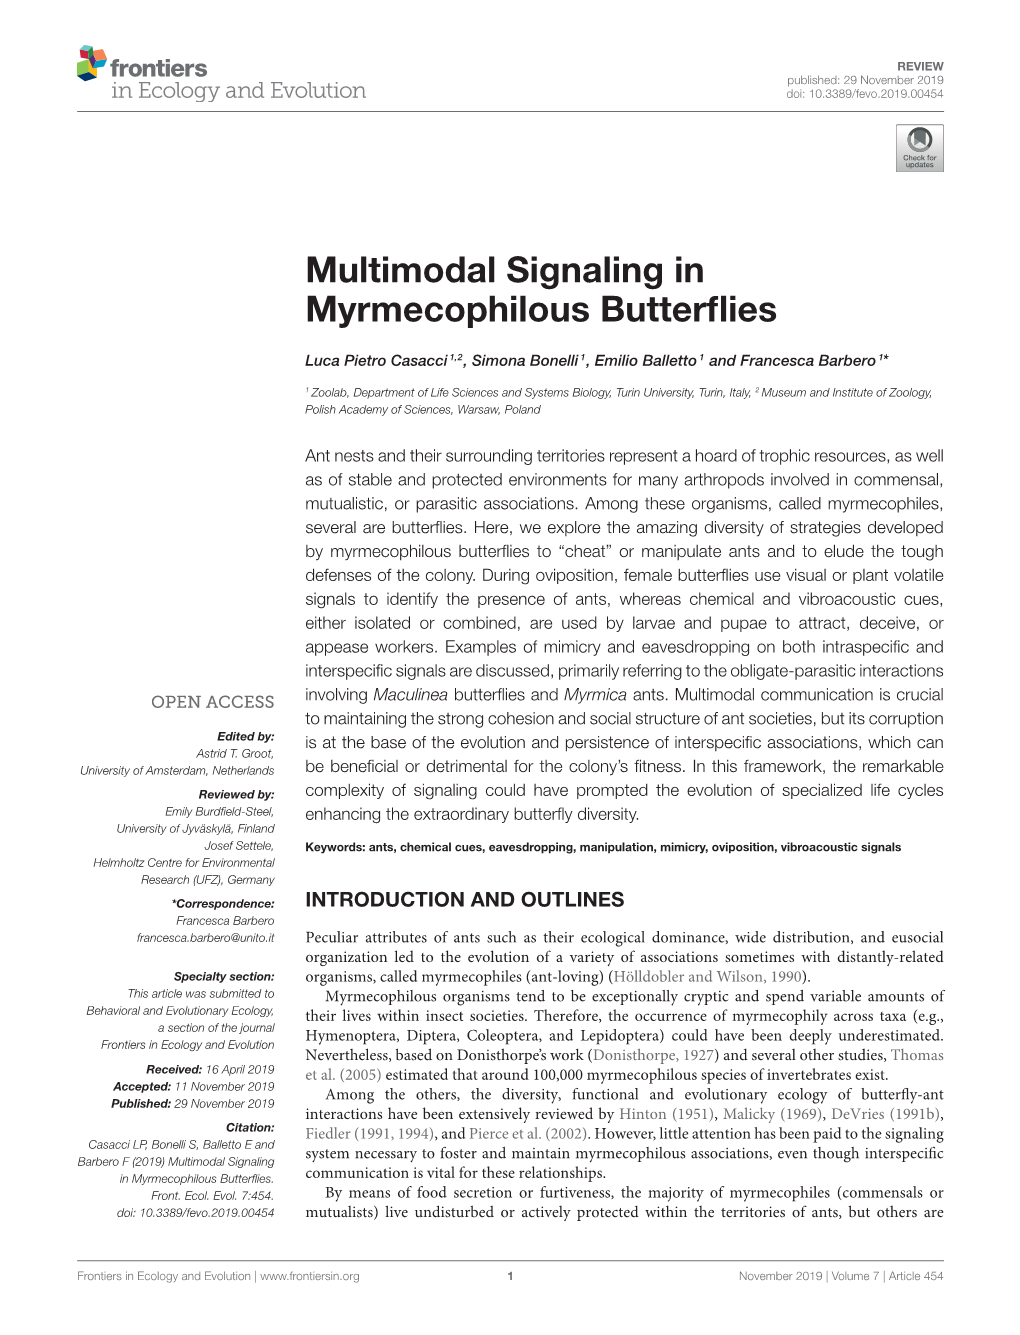 Multimodal Signaling in Myrmecophilous Butterflies